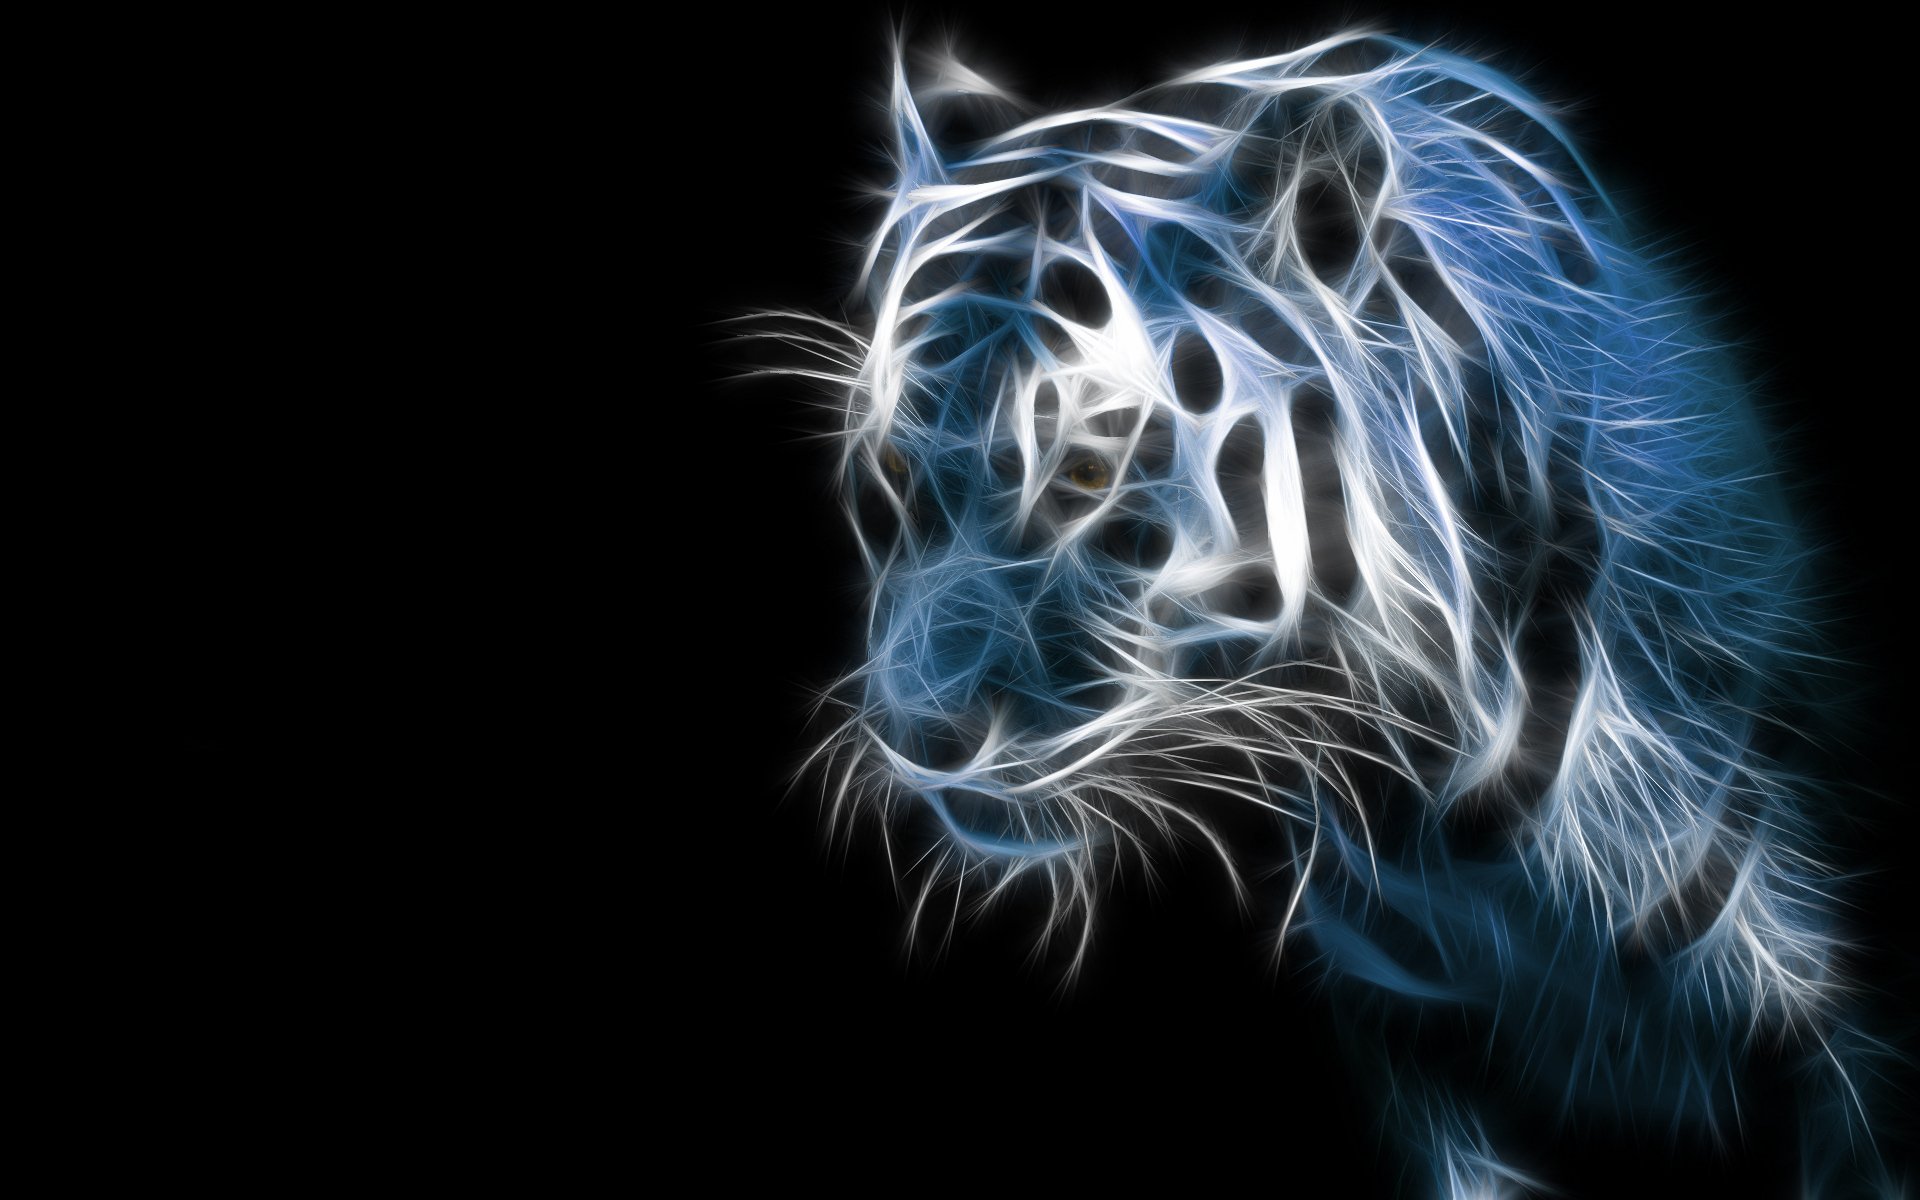 Tiger on dark background | Stock image | Colourbox